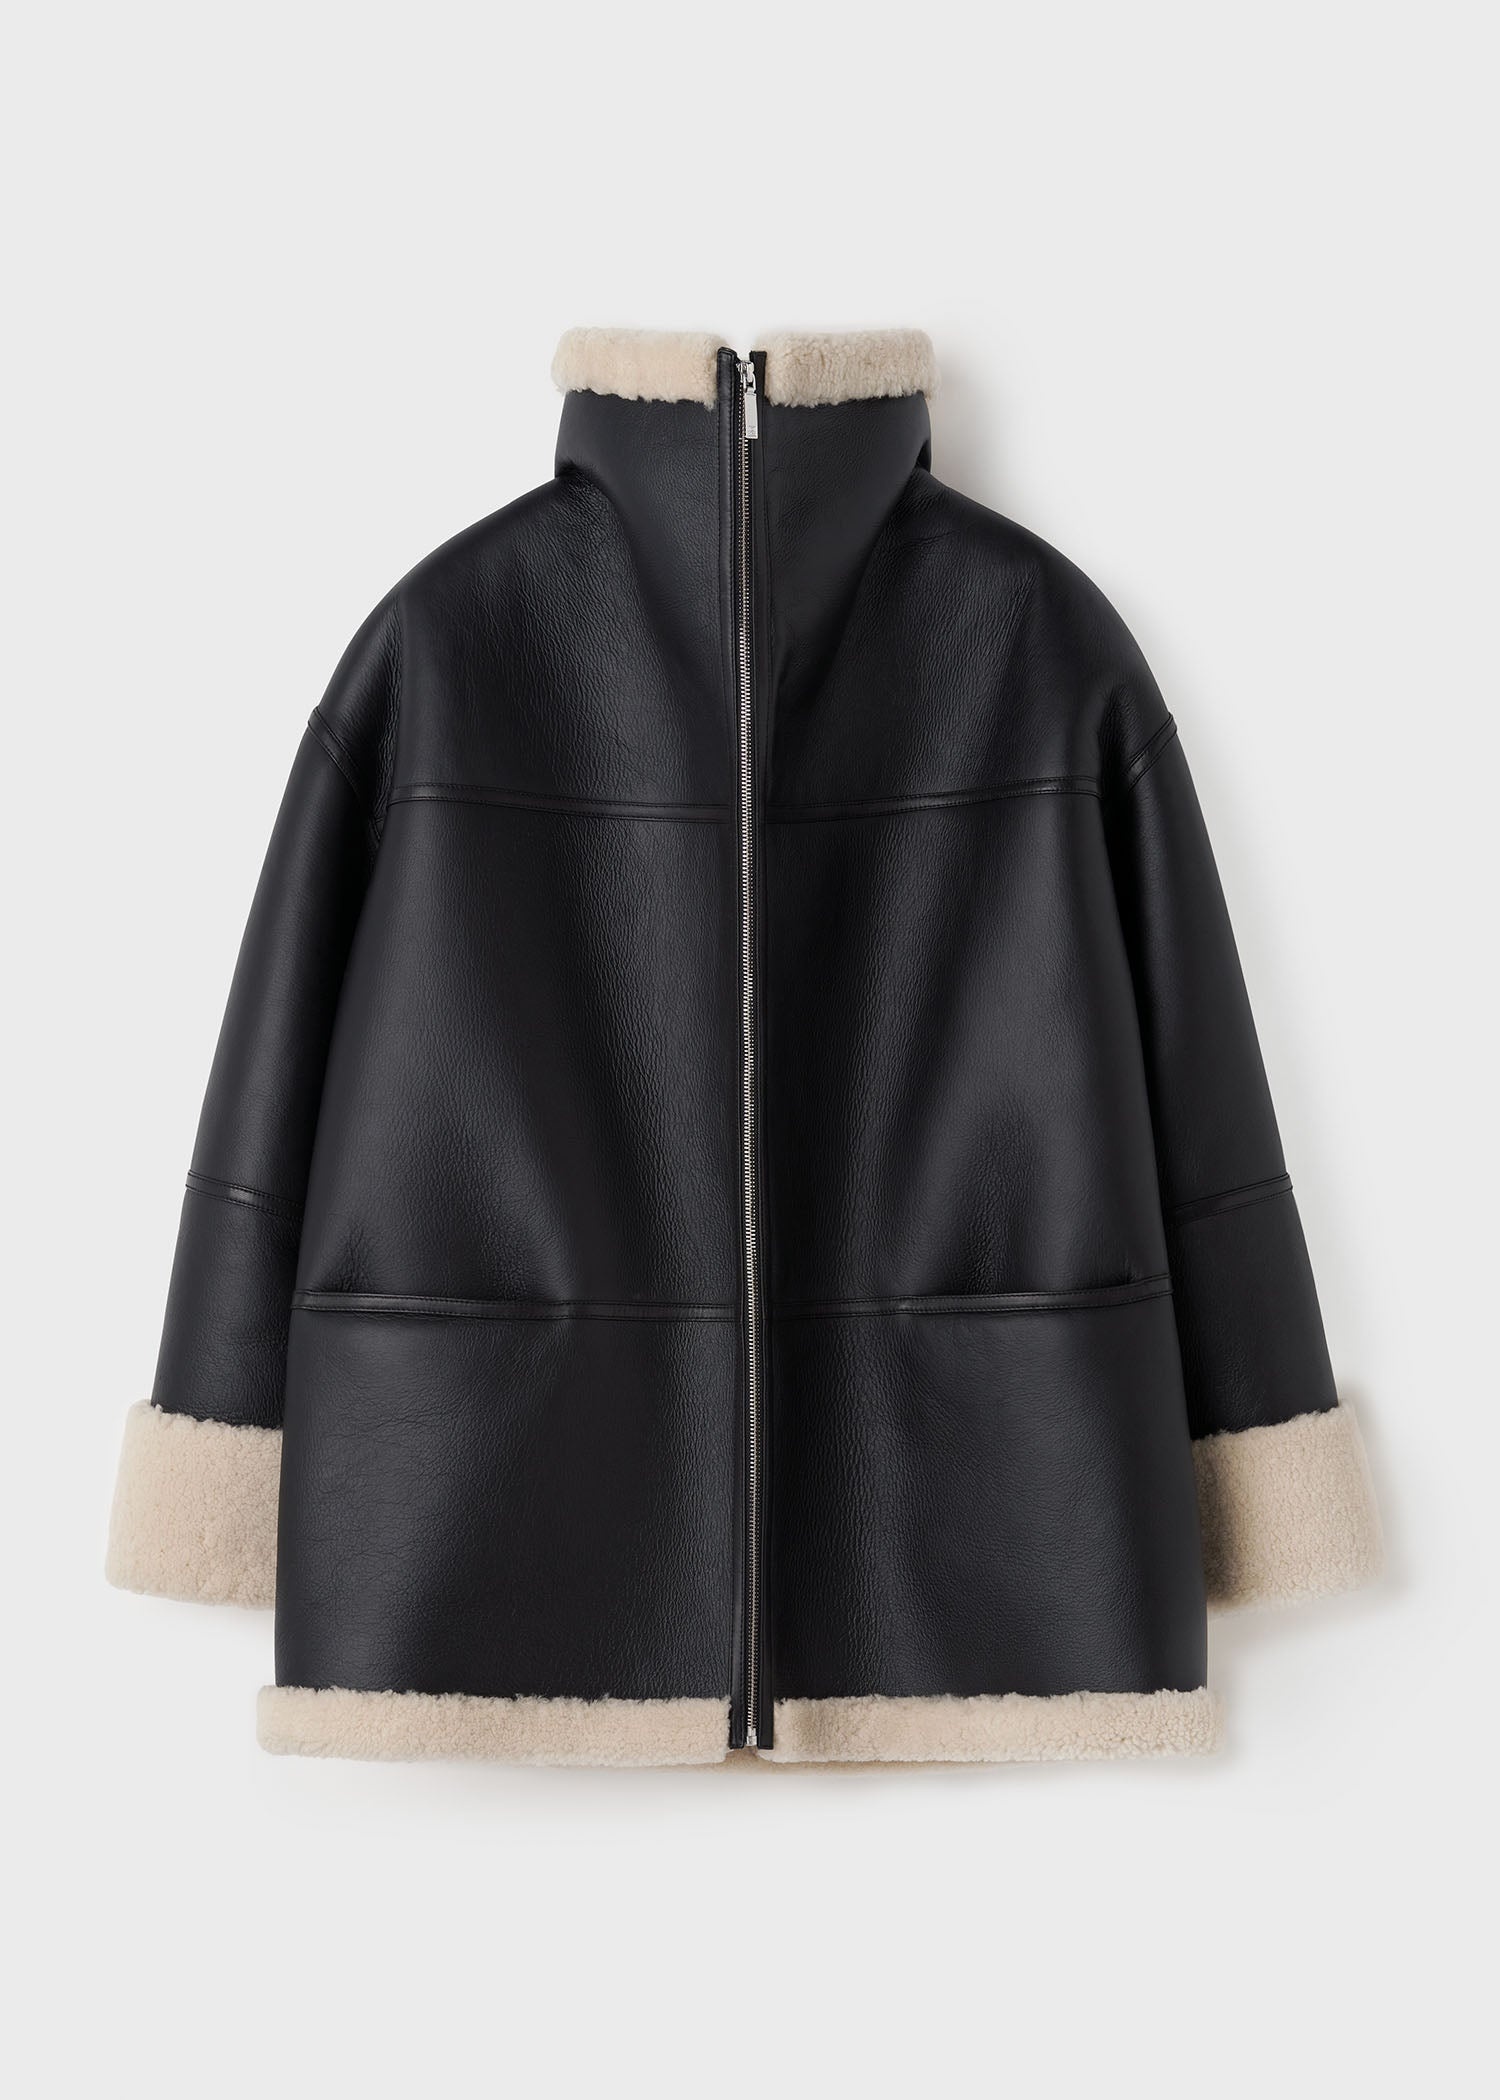 Signature shearling jacket black/off-white - 6